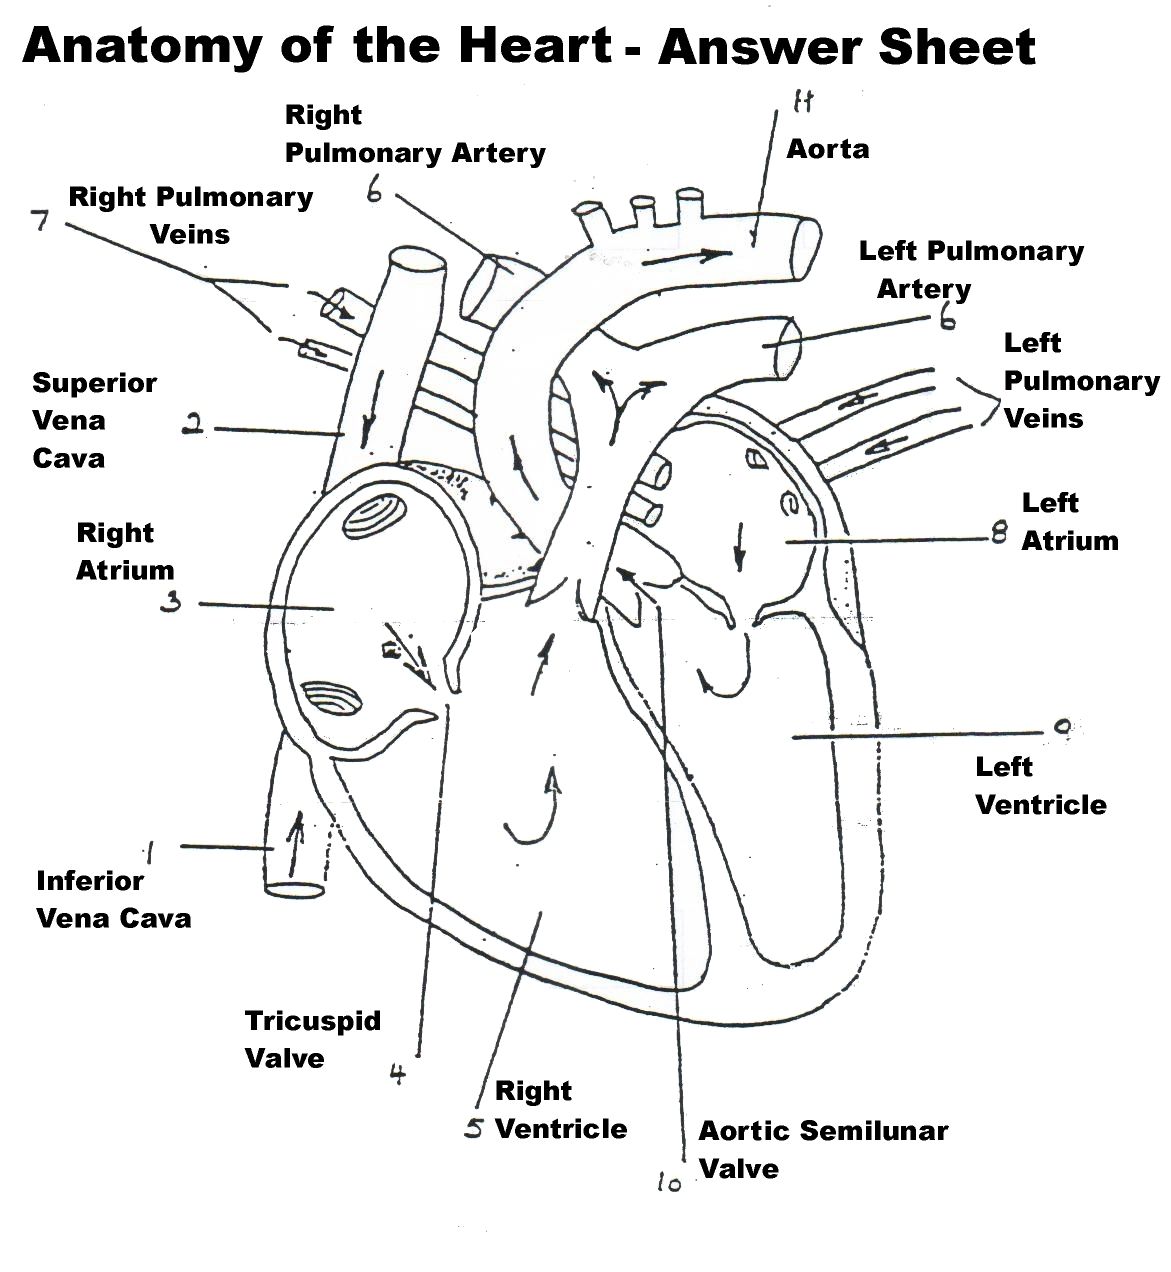 Human Heart Diagram Black and White | healthsanaz.com